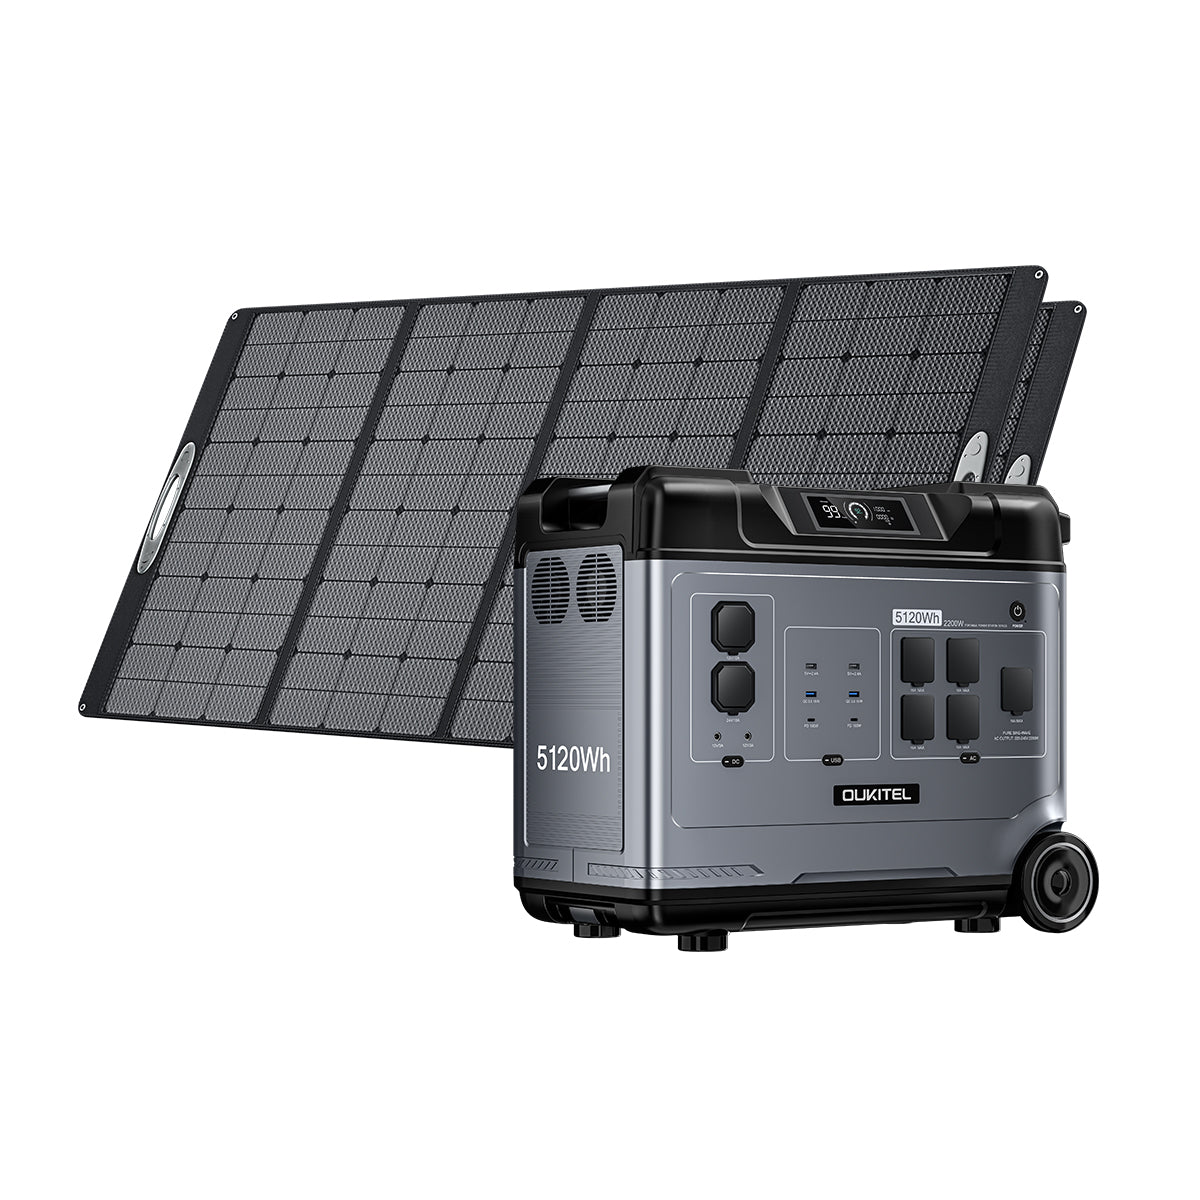 <tc>OUKITEL P5000 Generator Solar 2200W/5120Wh</tc>